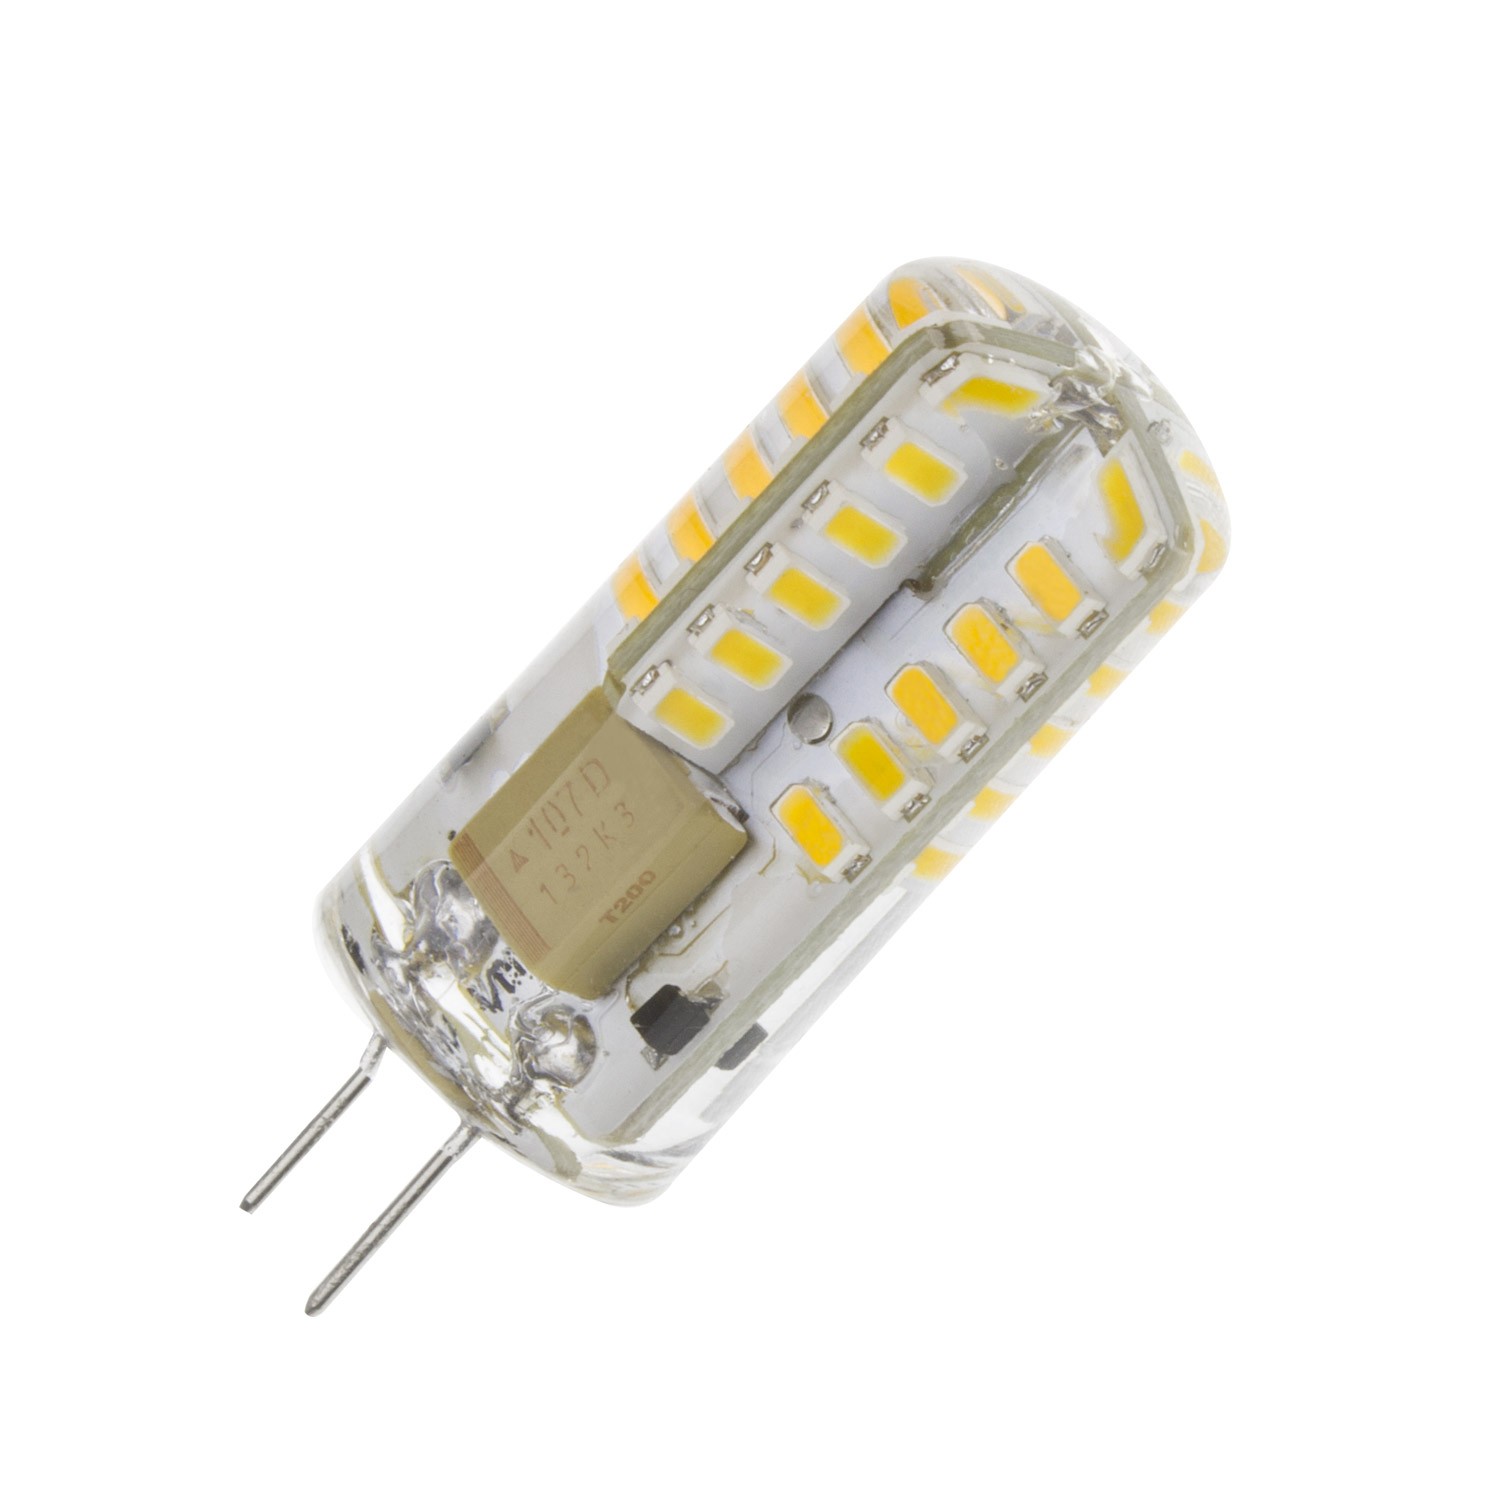 Zo veel Verplicht Vervolgen LED Lamp G4 1.8W 270 lm - Ledkia